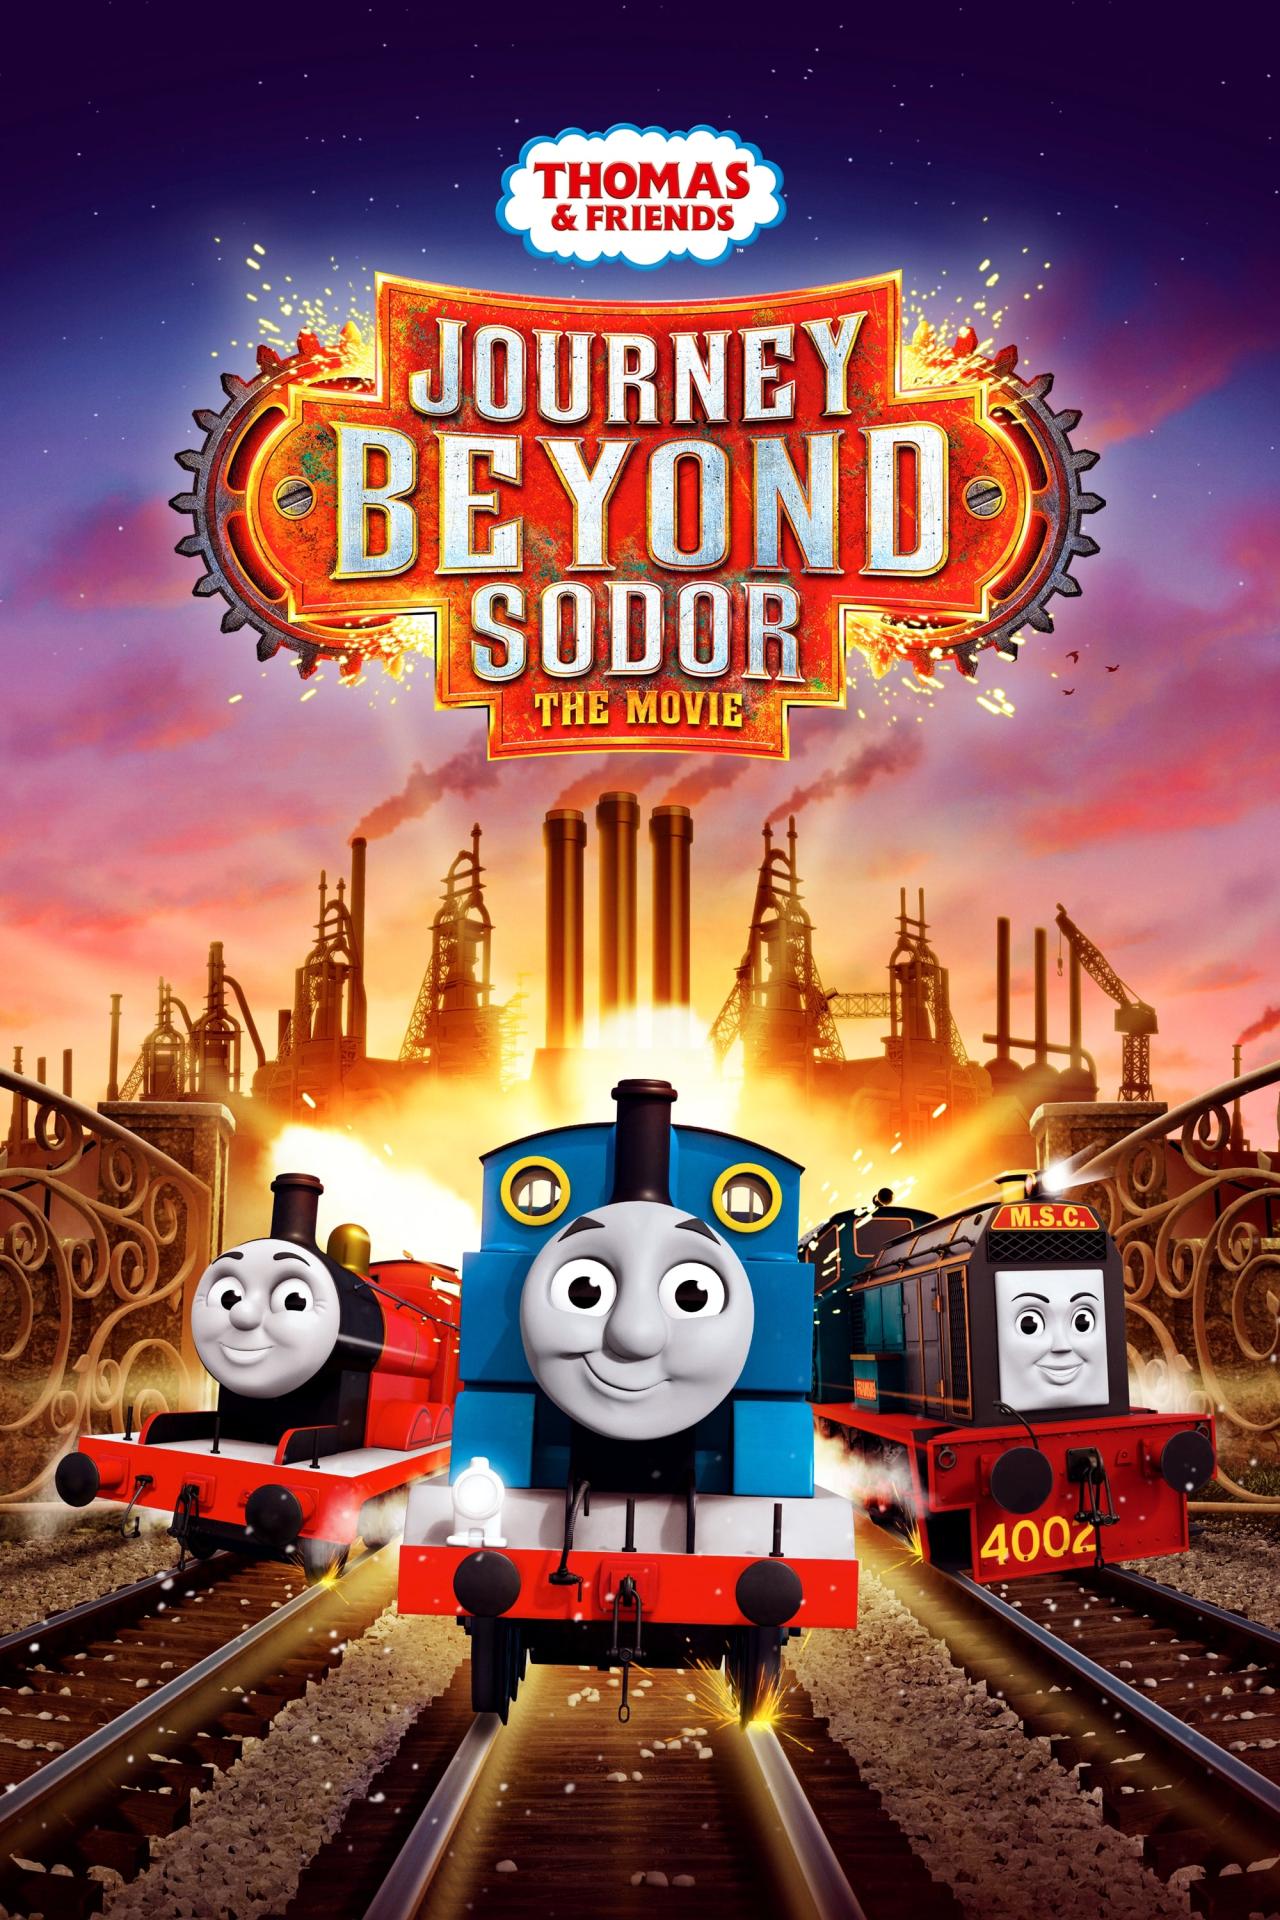 Affiche du film Thomas & Friends: Journey Beyond Sodor - The Movie poster